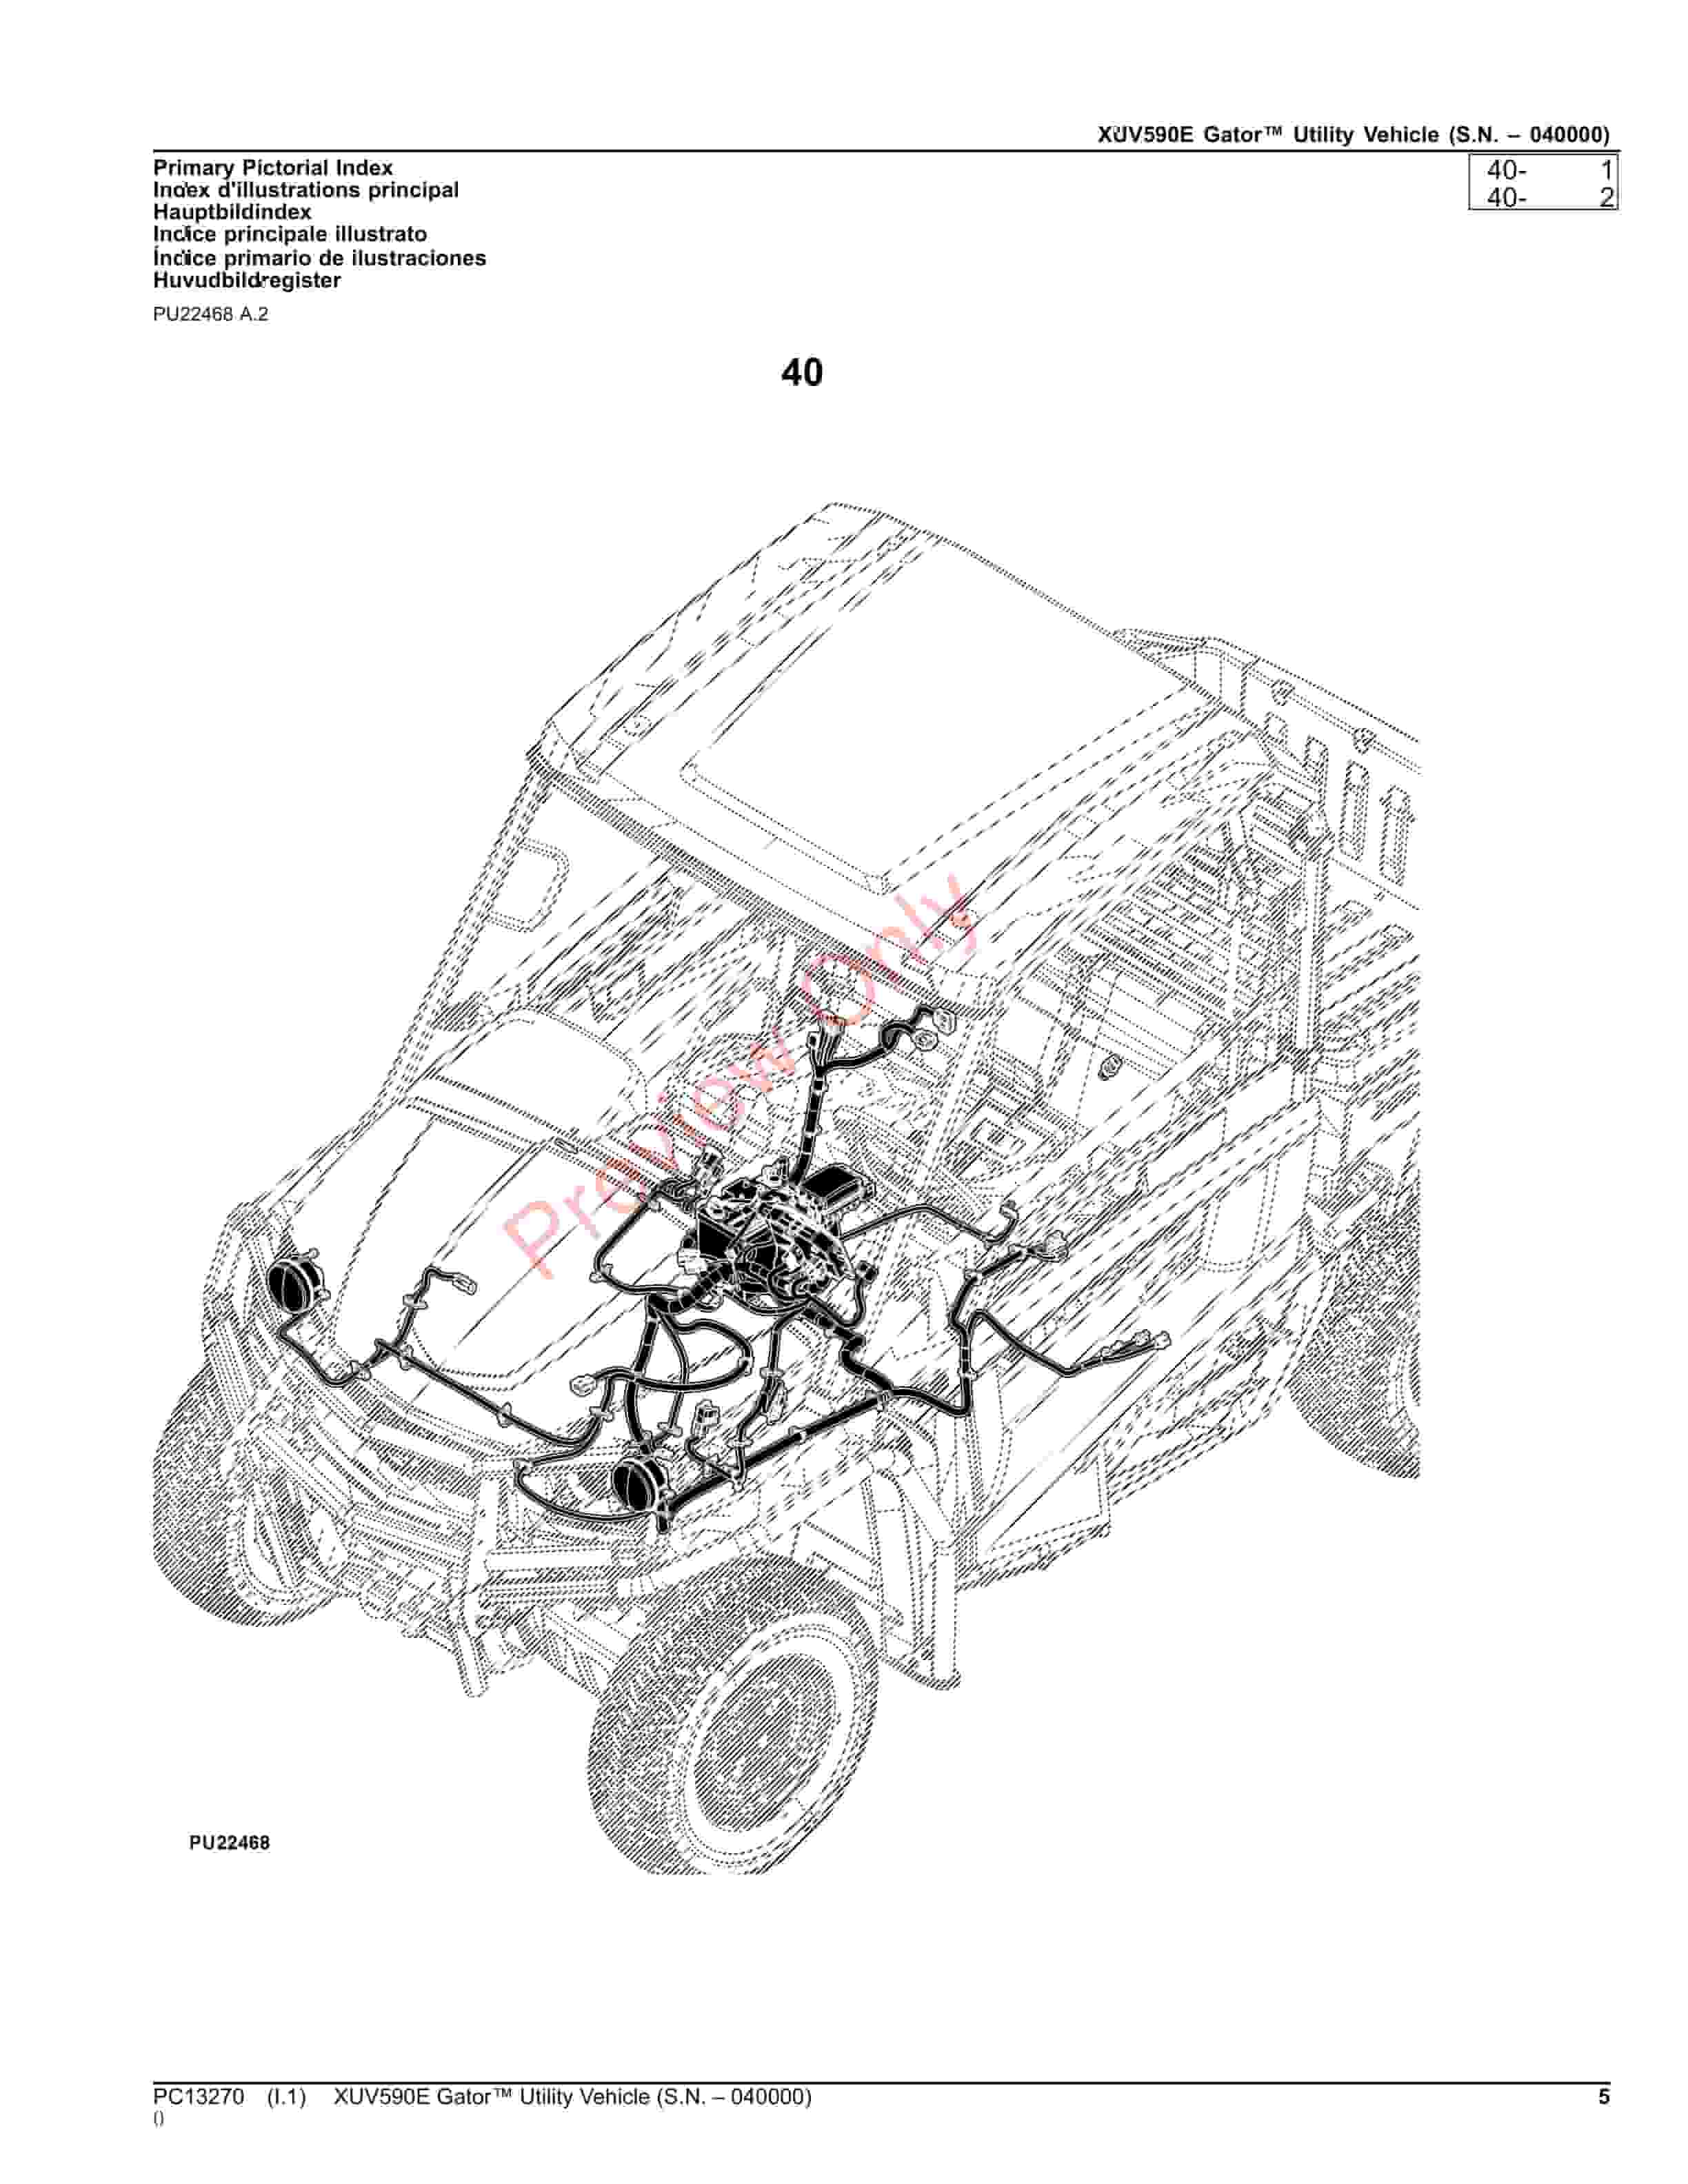 John Deere XUV590E Gator Utility Vehicle (S.N. 040000) Parts Catalog PC13270 10SEP23-5